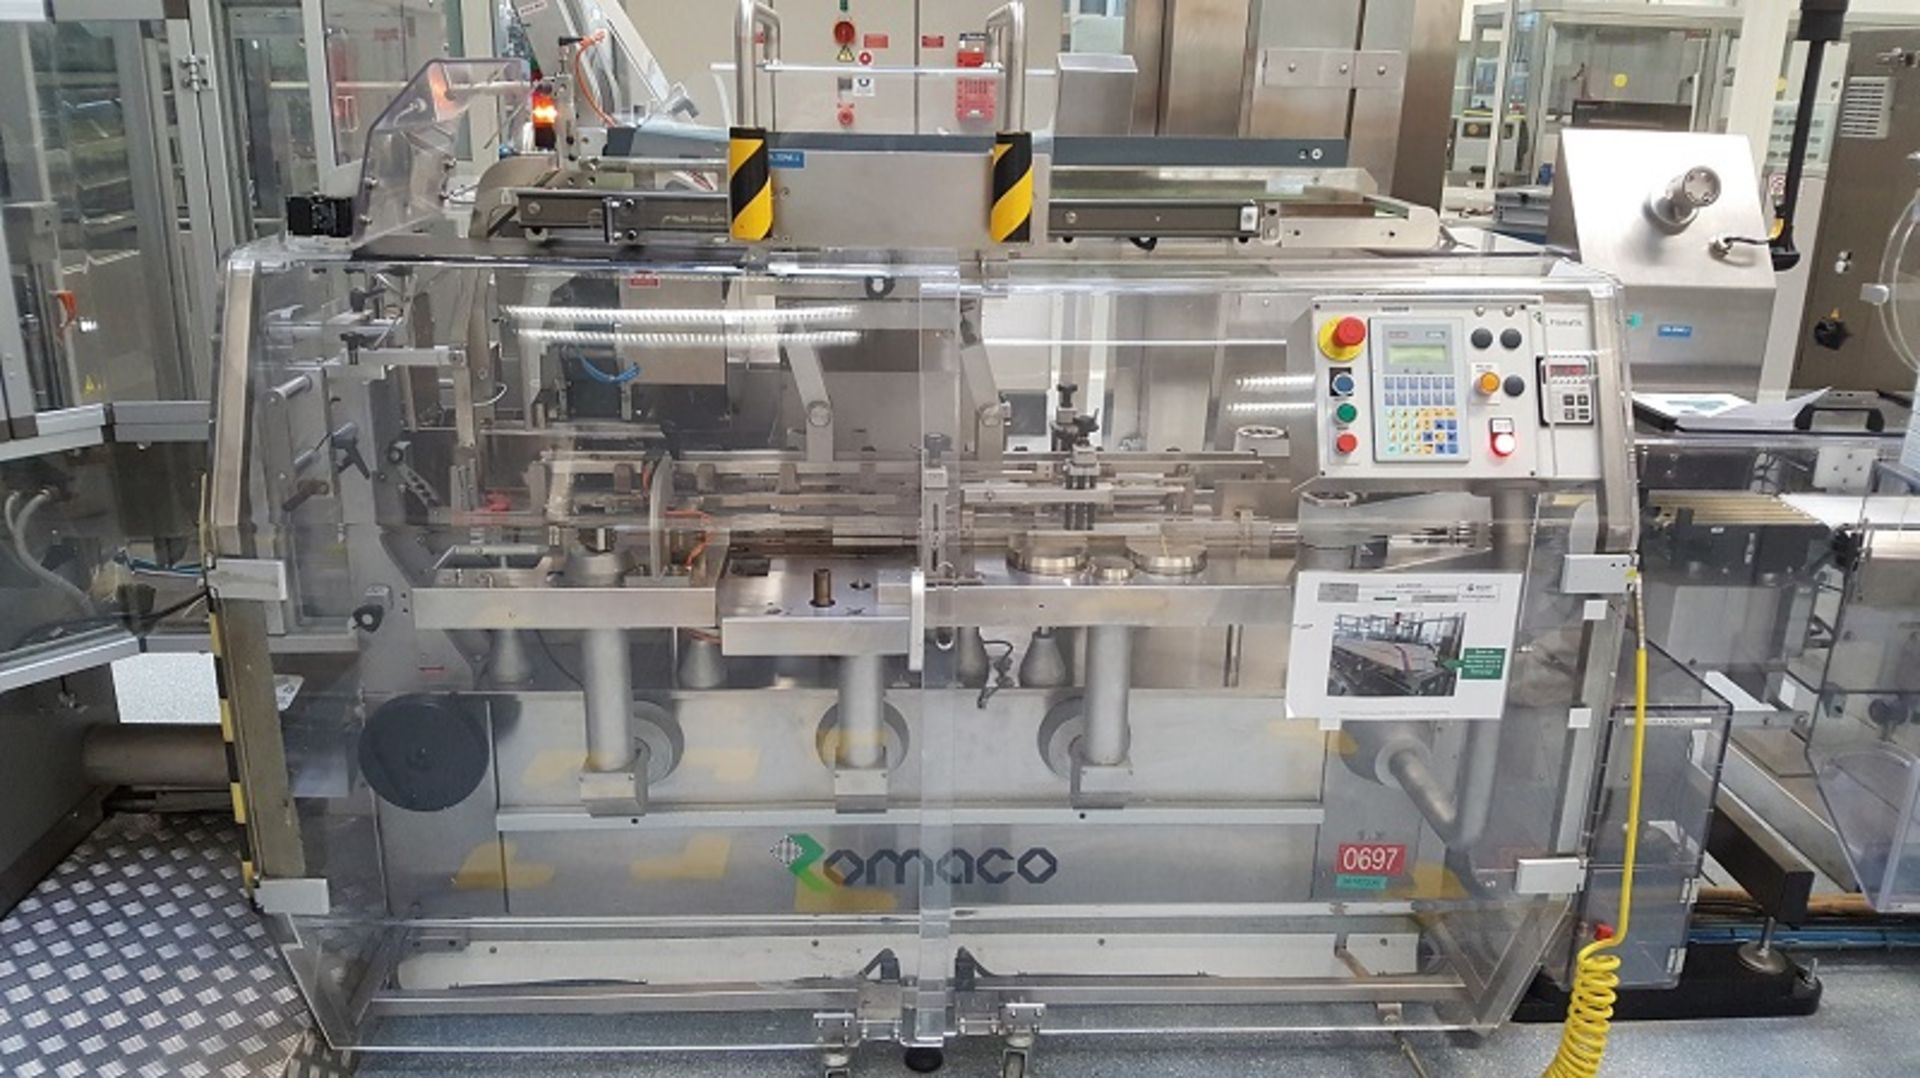 Romaco Promatic P150 Fully Automatic Horizontal Intermittent Cartoning Machine - Image 3 of 6